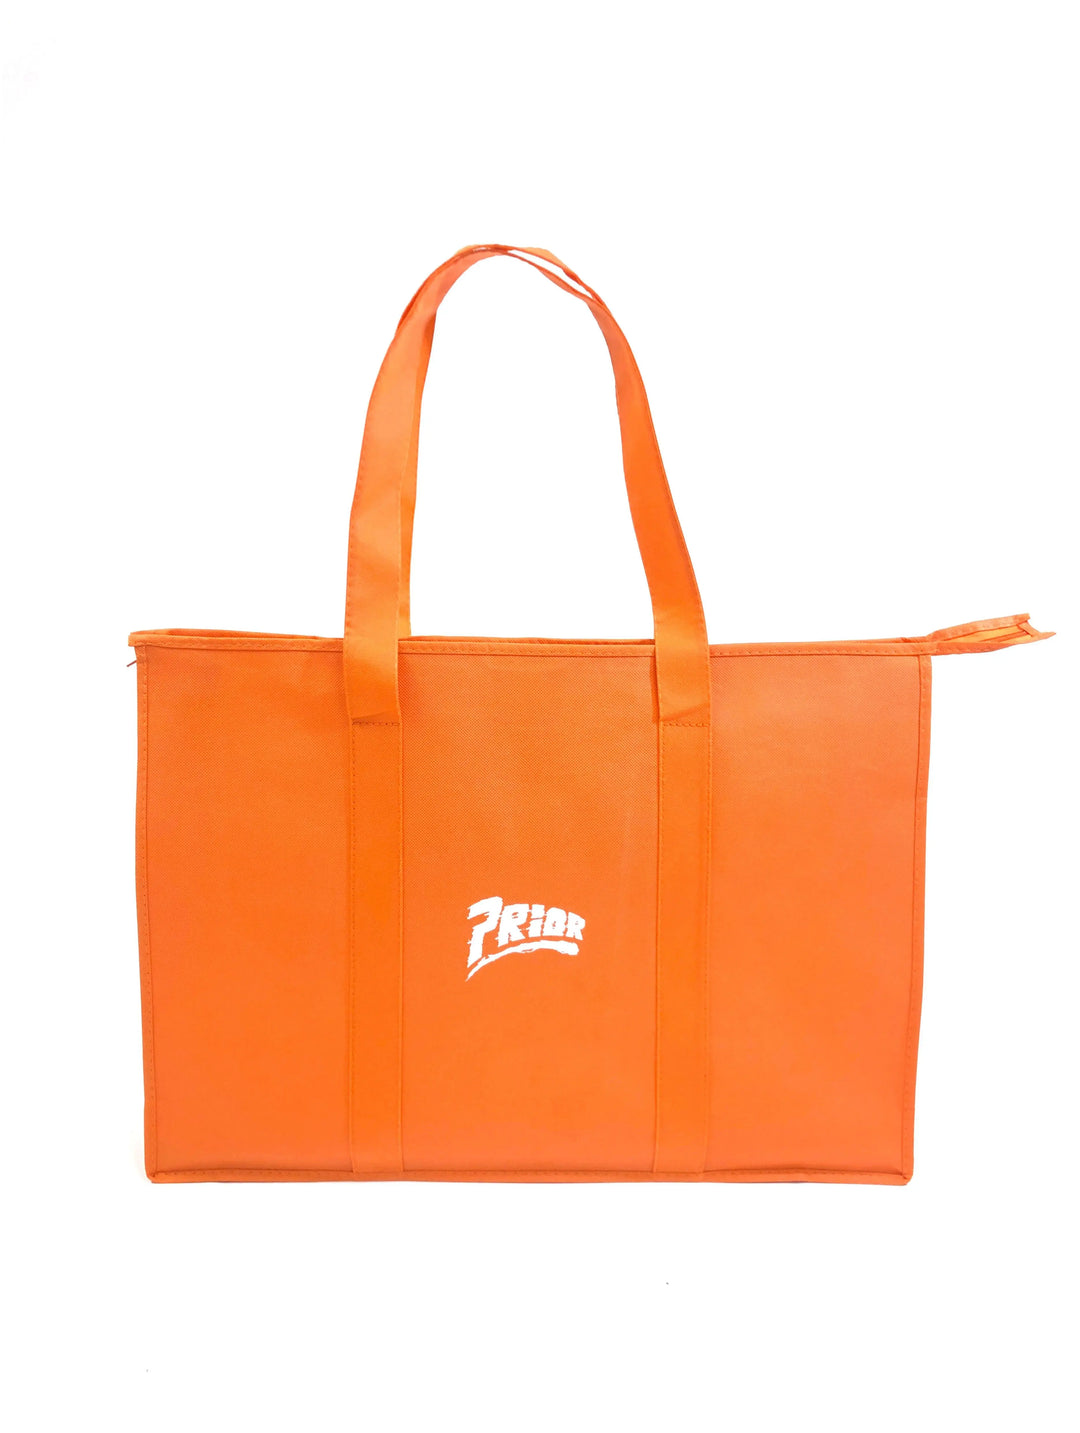 Prior Syracuse Orange Tote Bag Prior